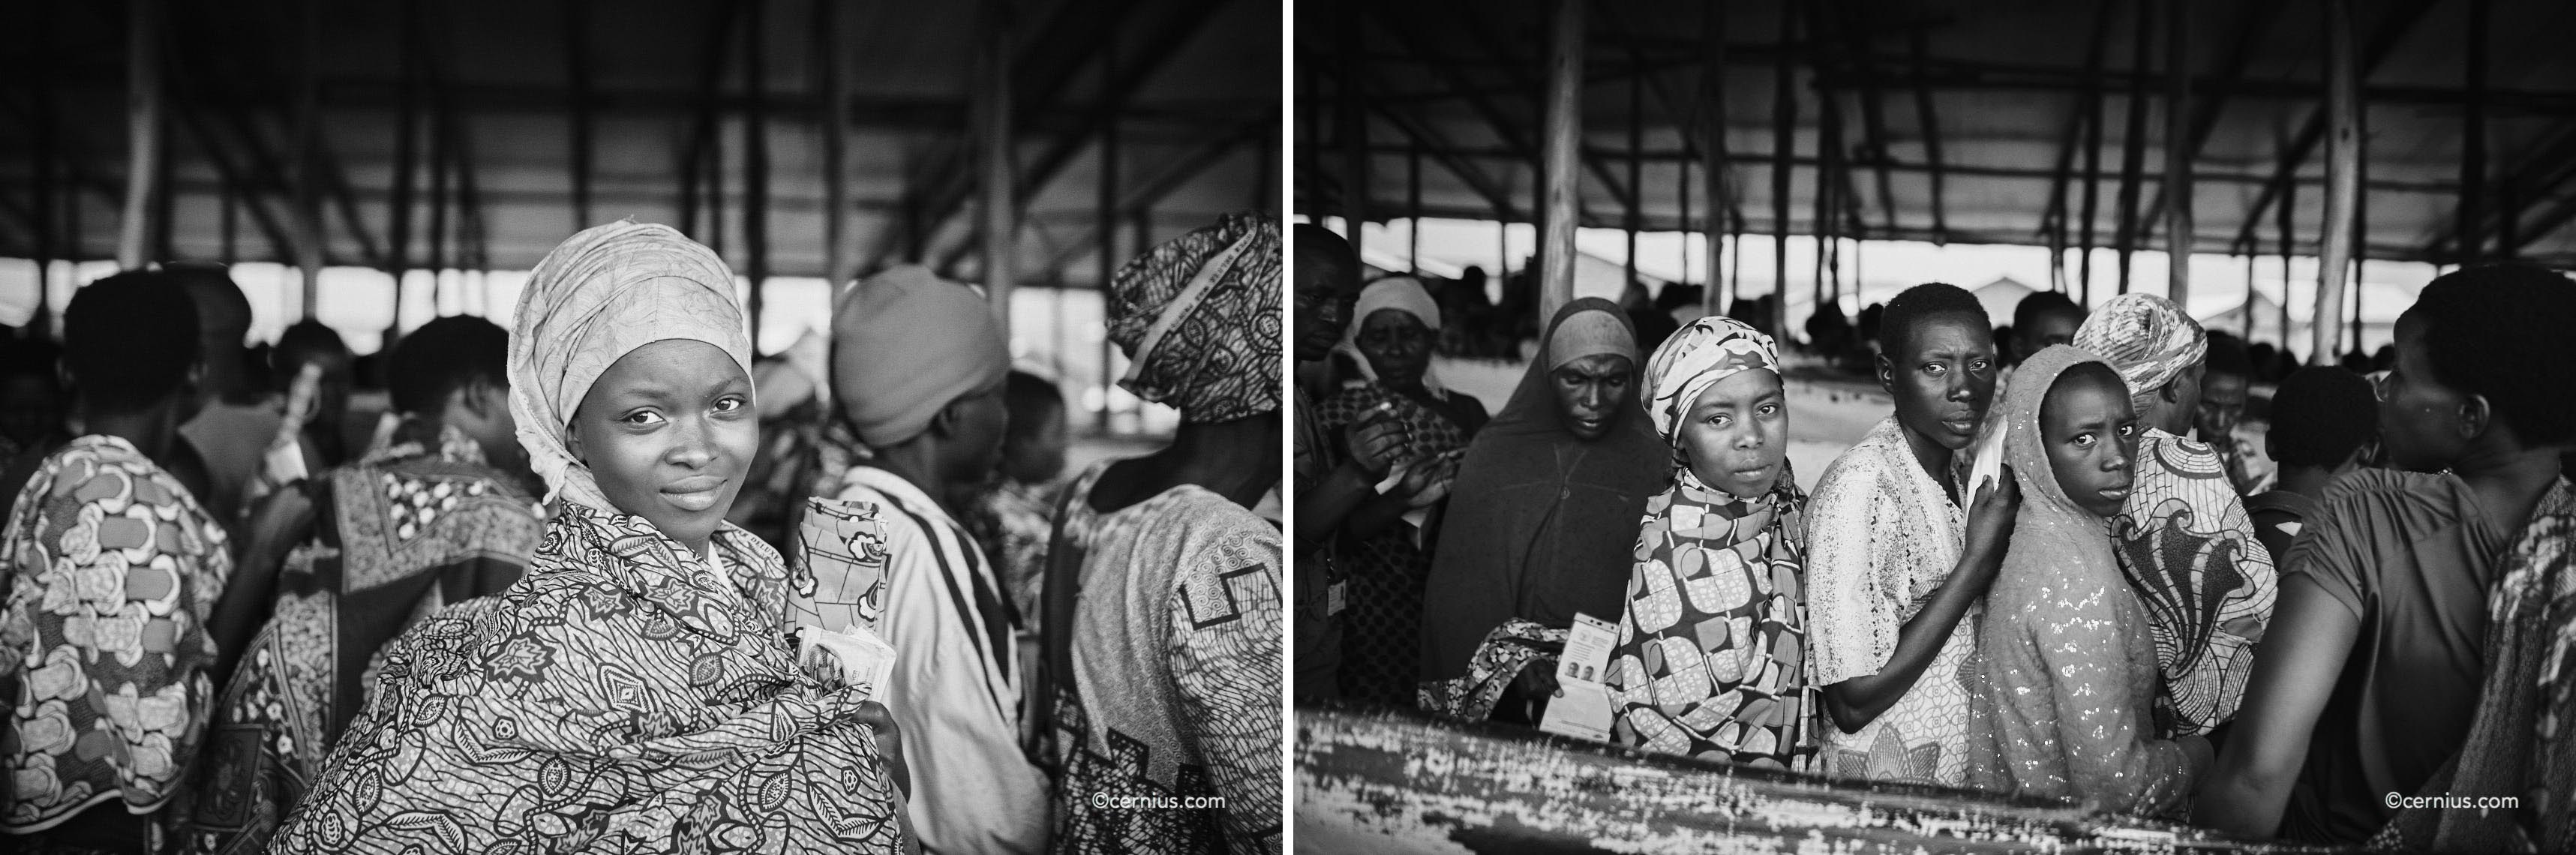 Mahama Refugee Camp in Rwanda, 2016 | Juozas Cernius